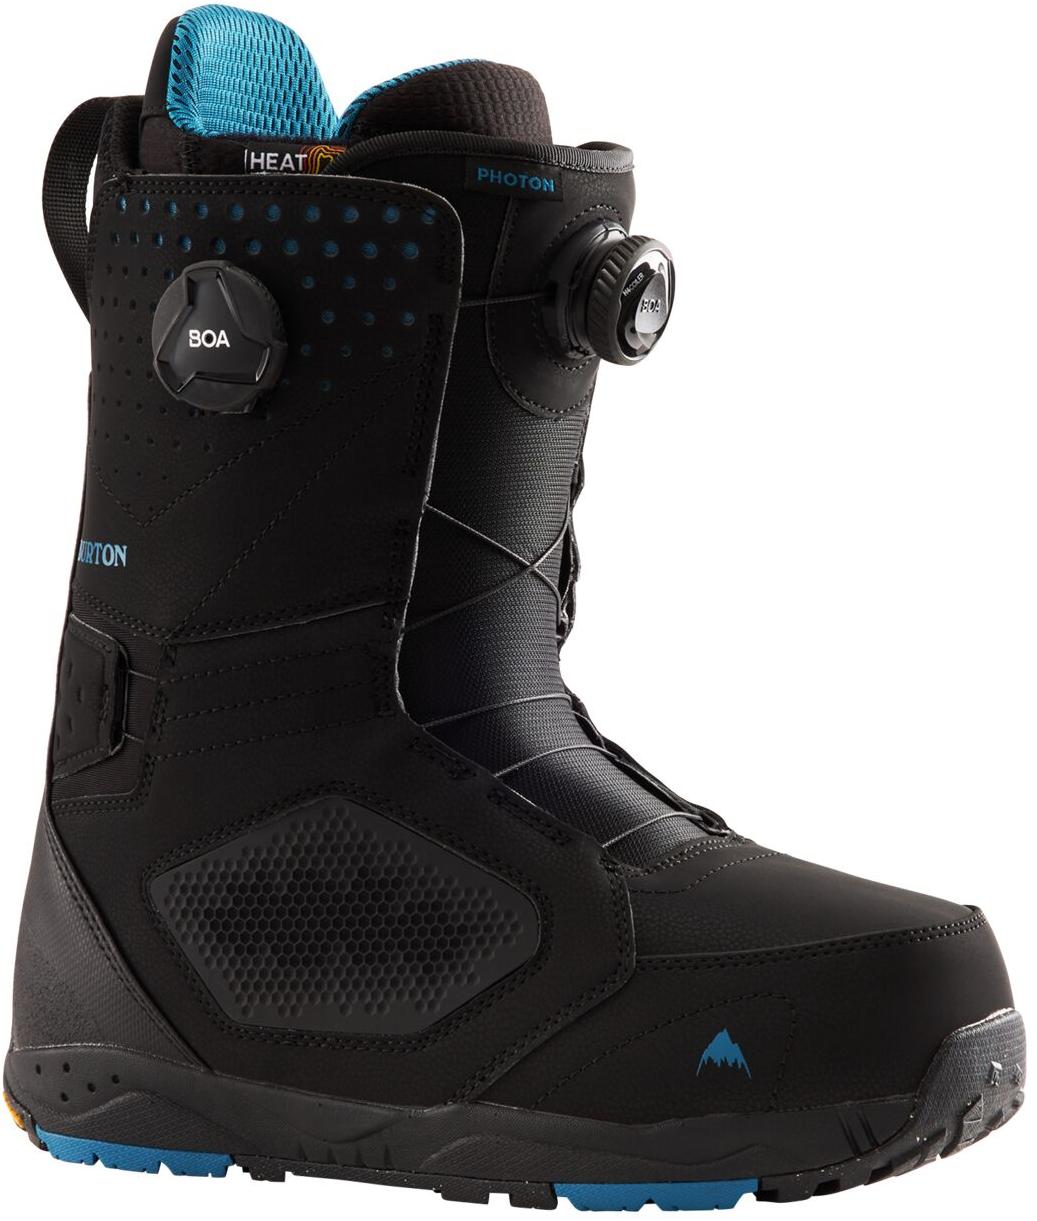 фото Ботинки для сноуборда burton photon boa 2021/2022, black, 26,5 см